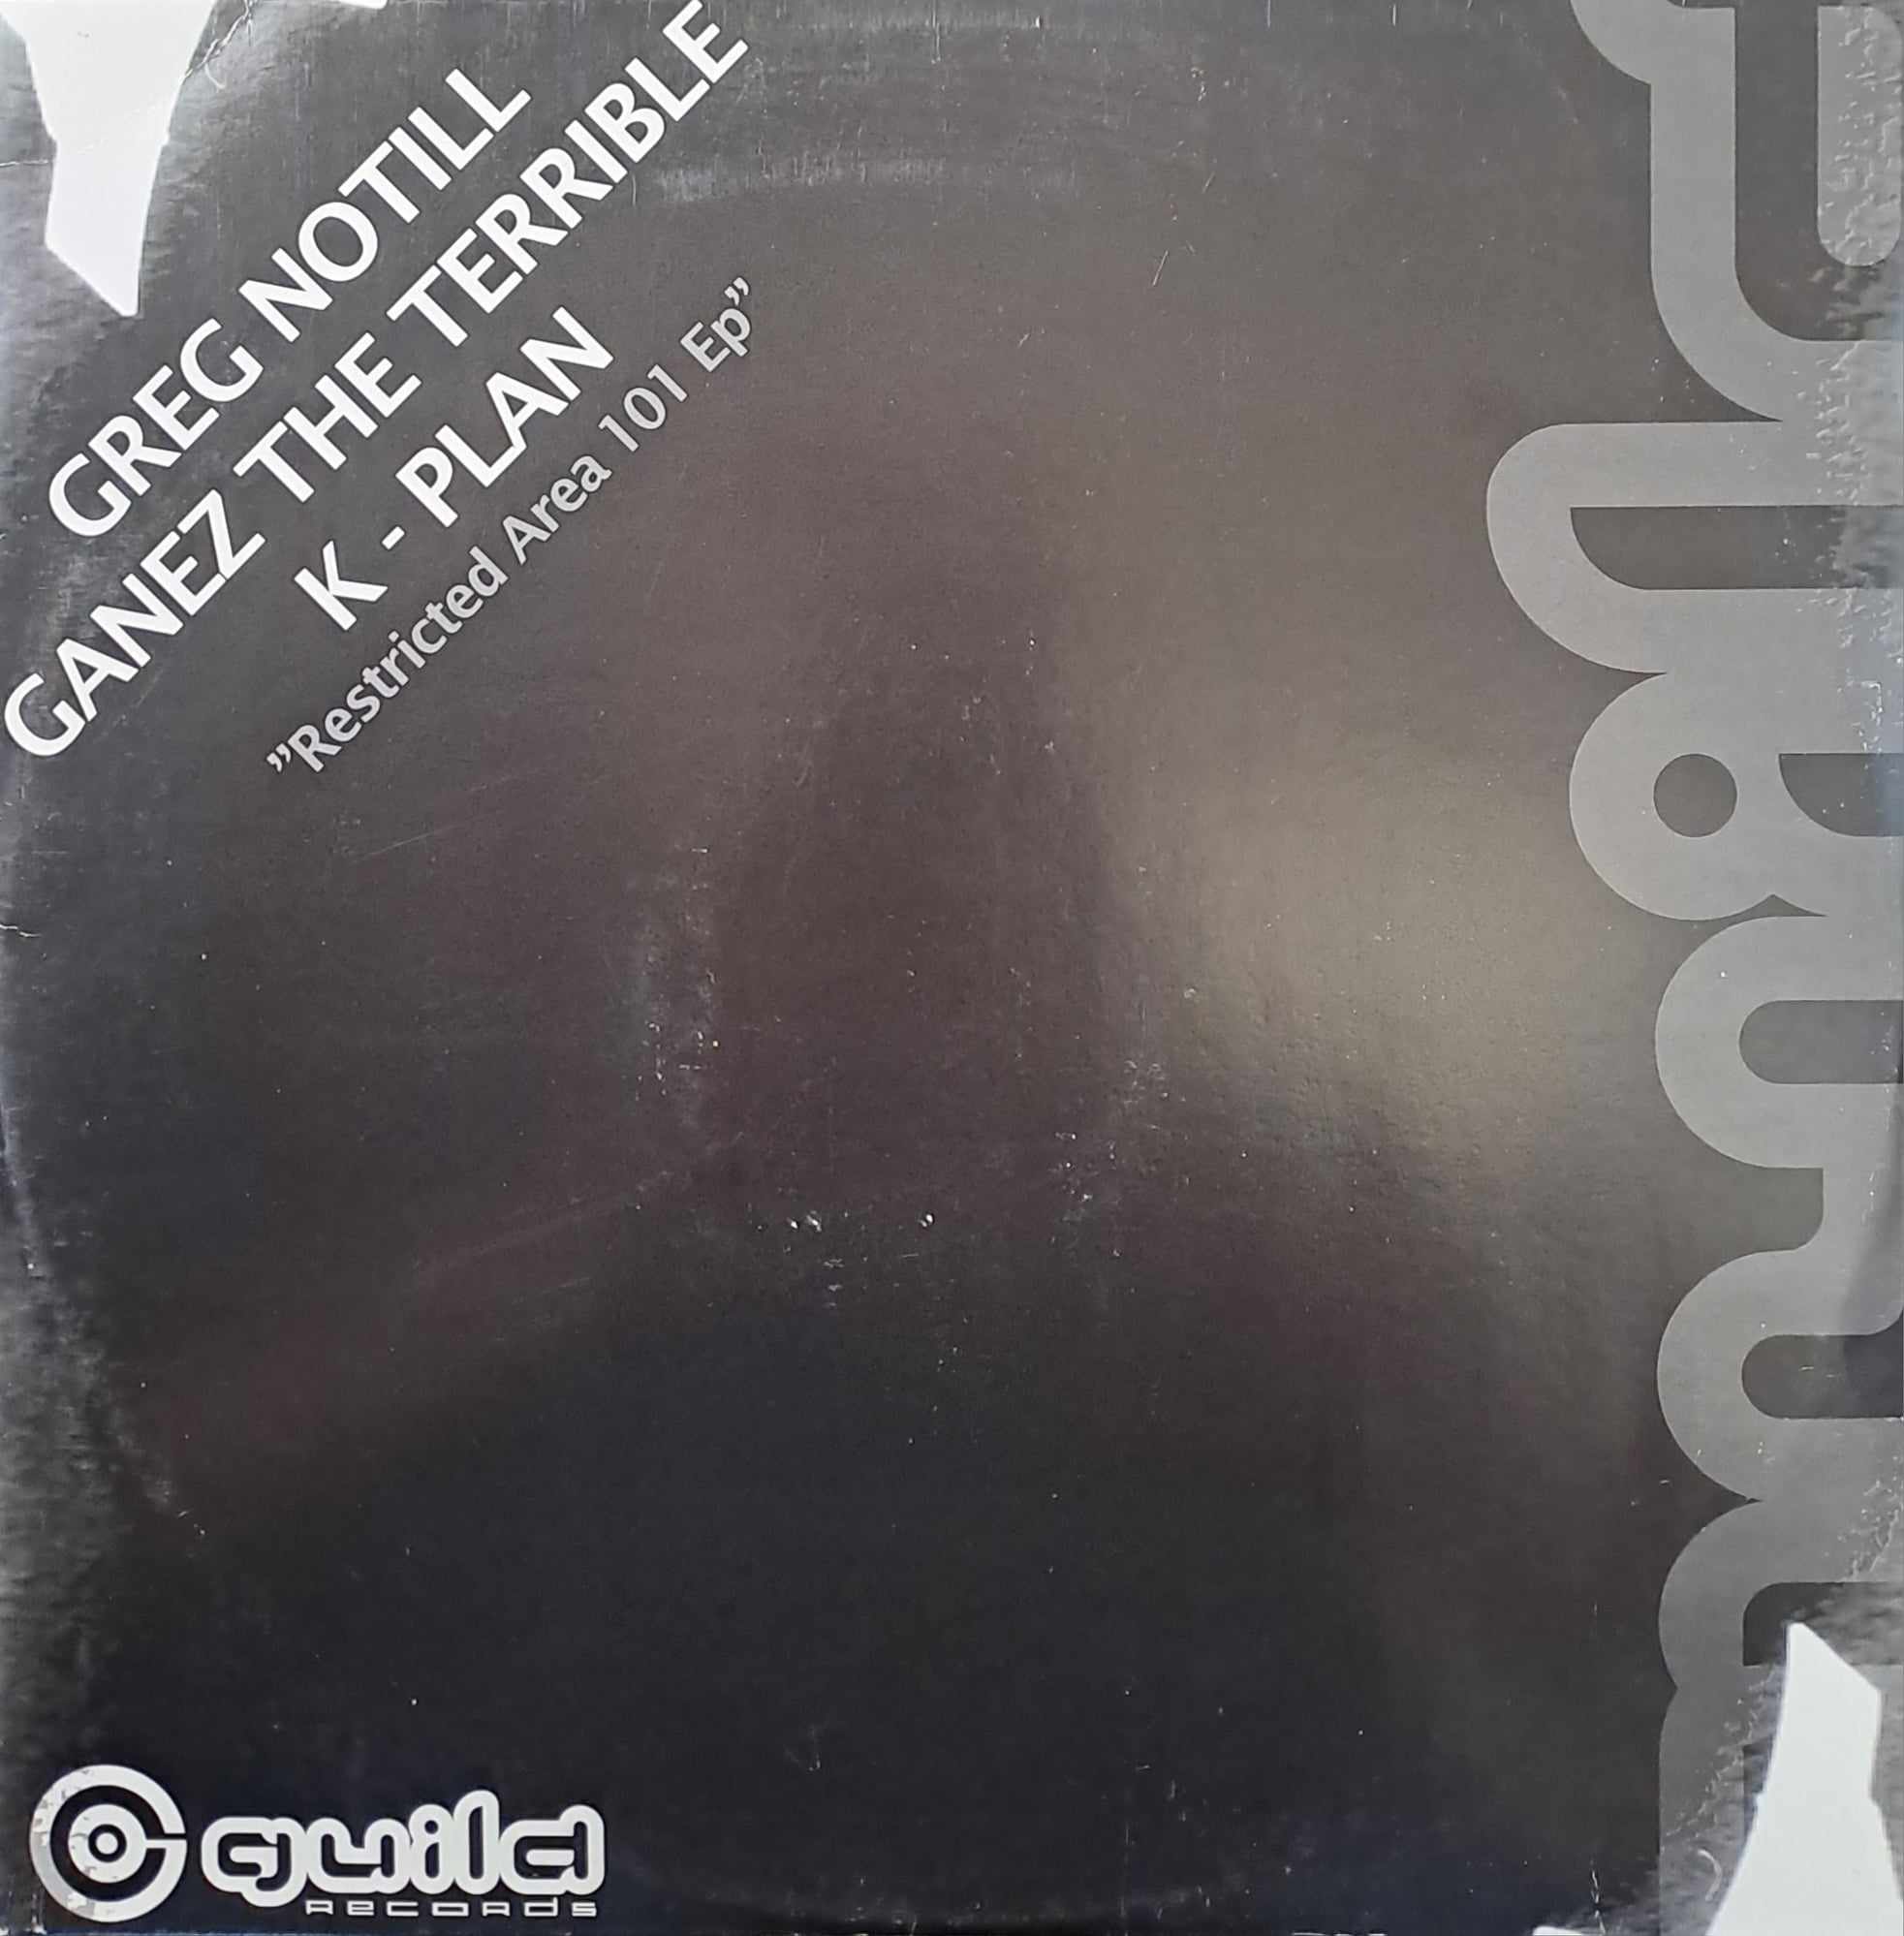 Guild Records 101 - vinyle hard techno